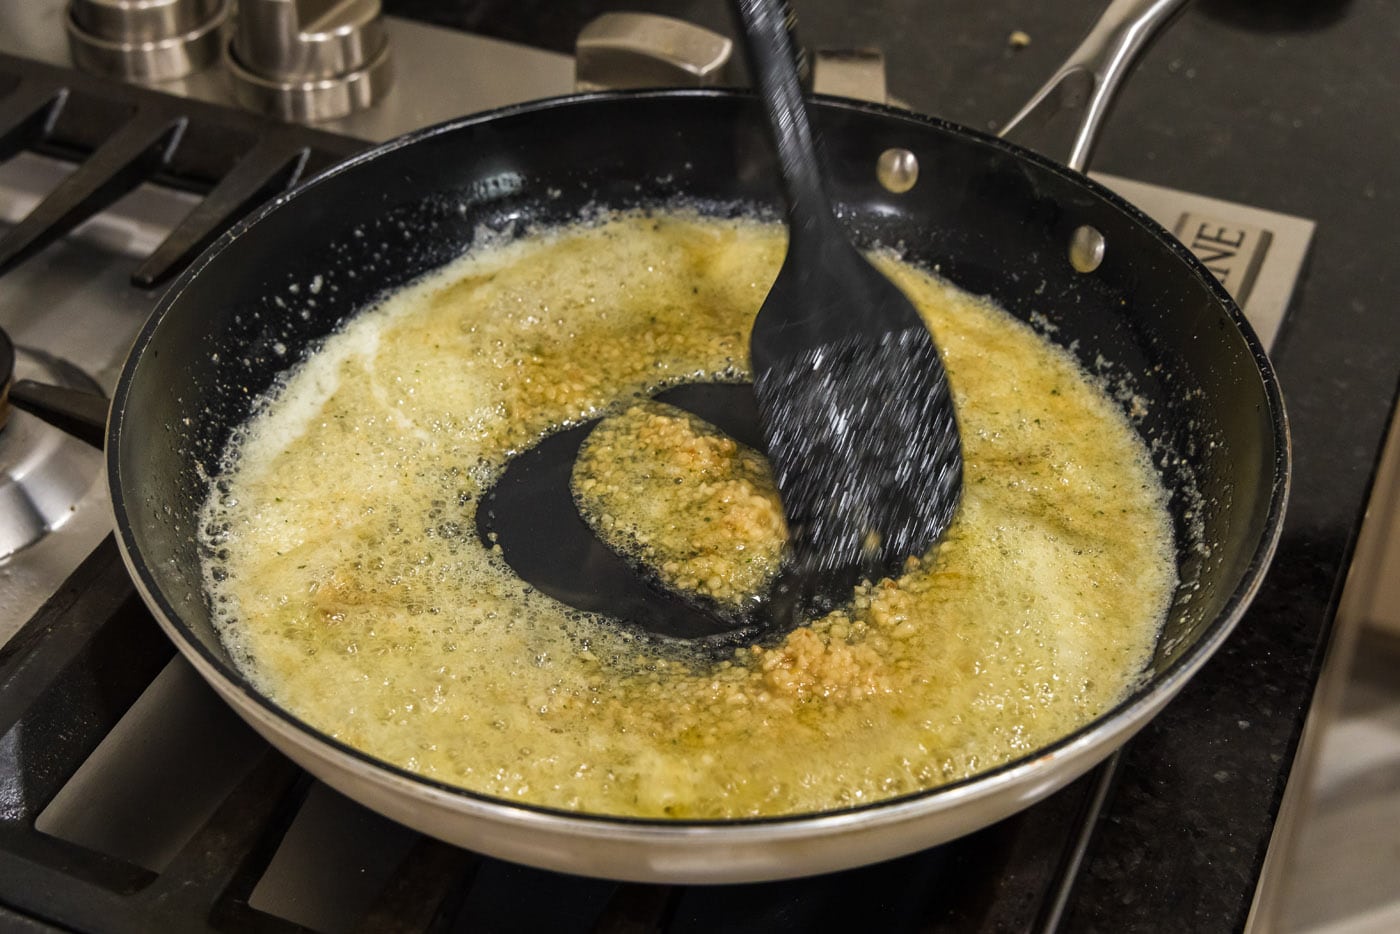 stirring minced garlic into seasoned butter ina skillet